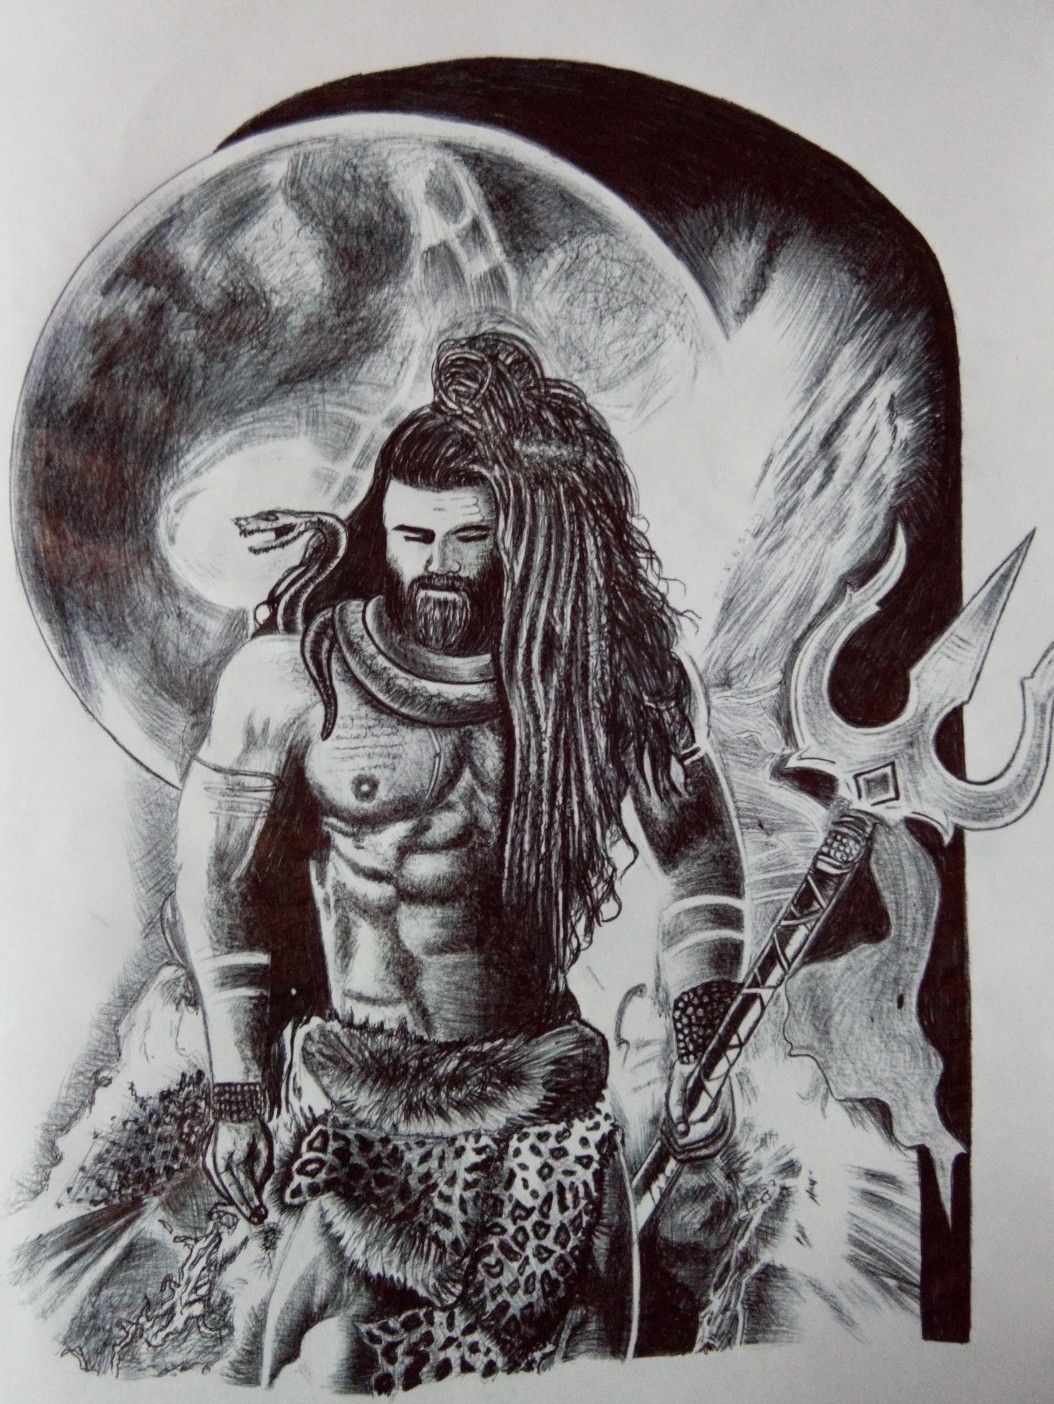 The Hindu (Sanatana Dharma) god Shiva. Pen and Ink : r/drawing